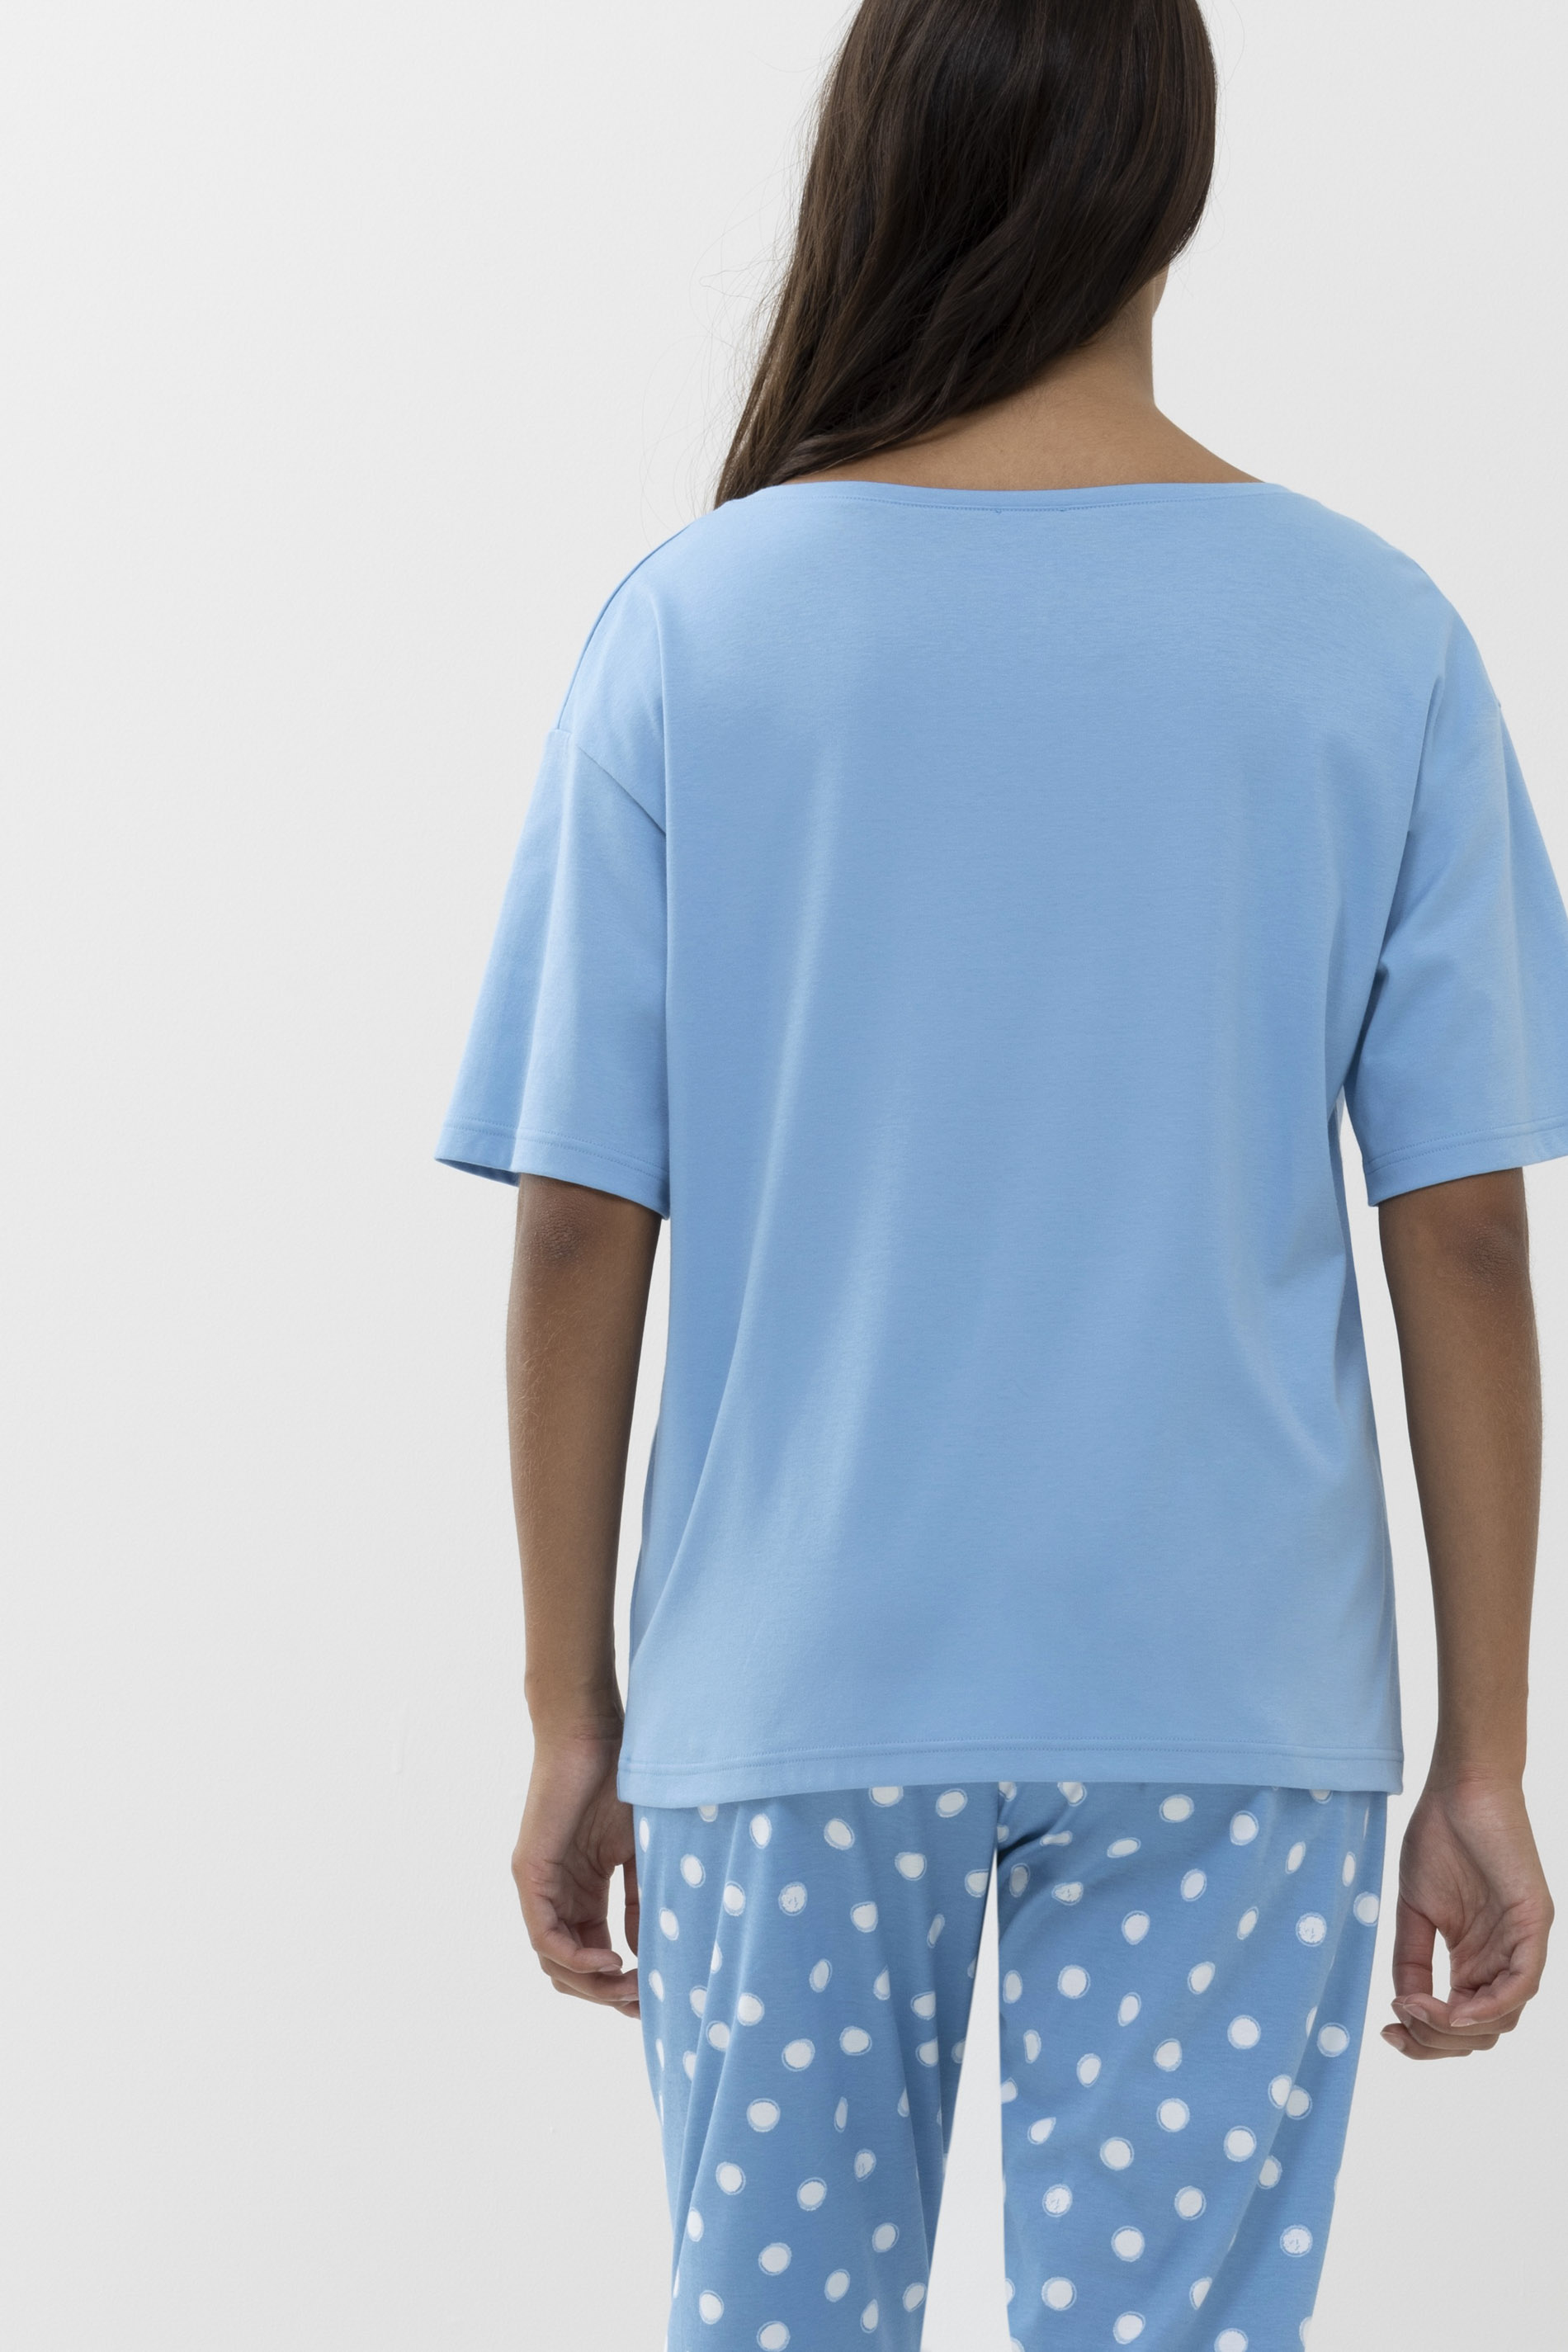 Shirt Serie Sleepy & Easy Rear View | mey®